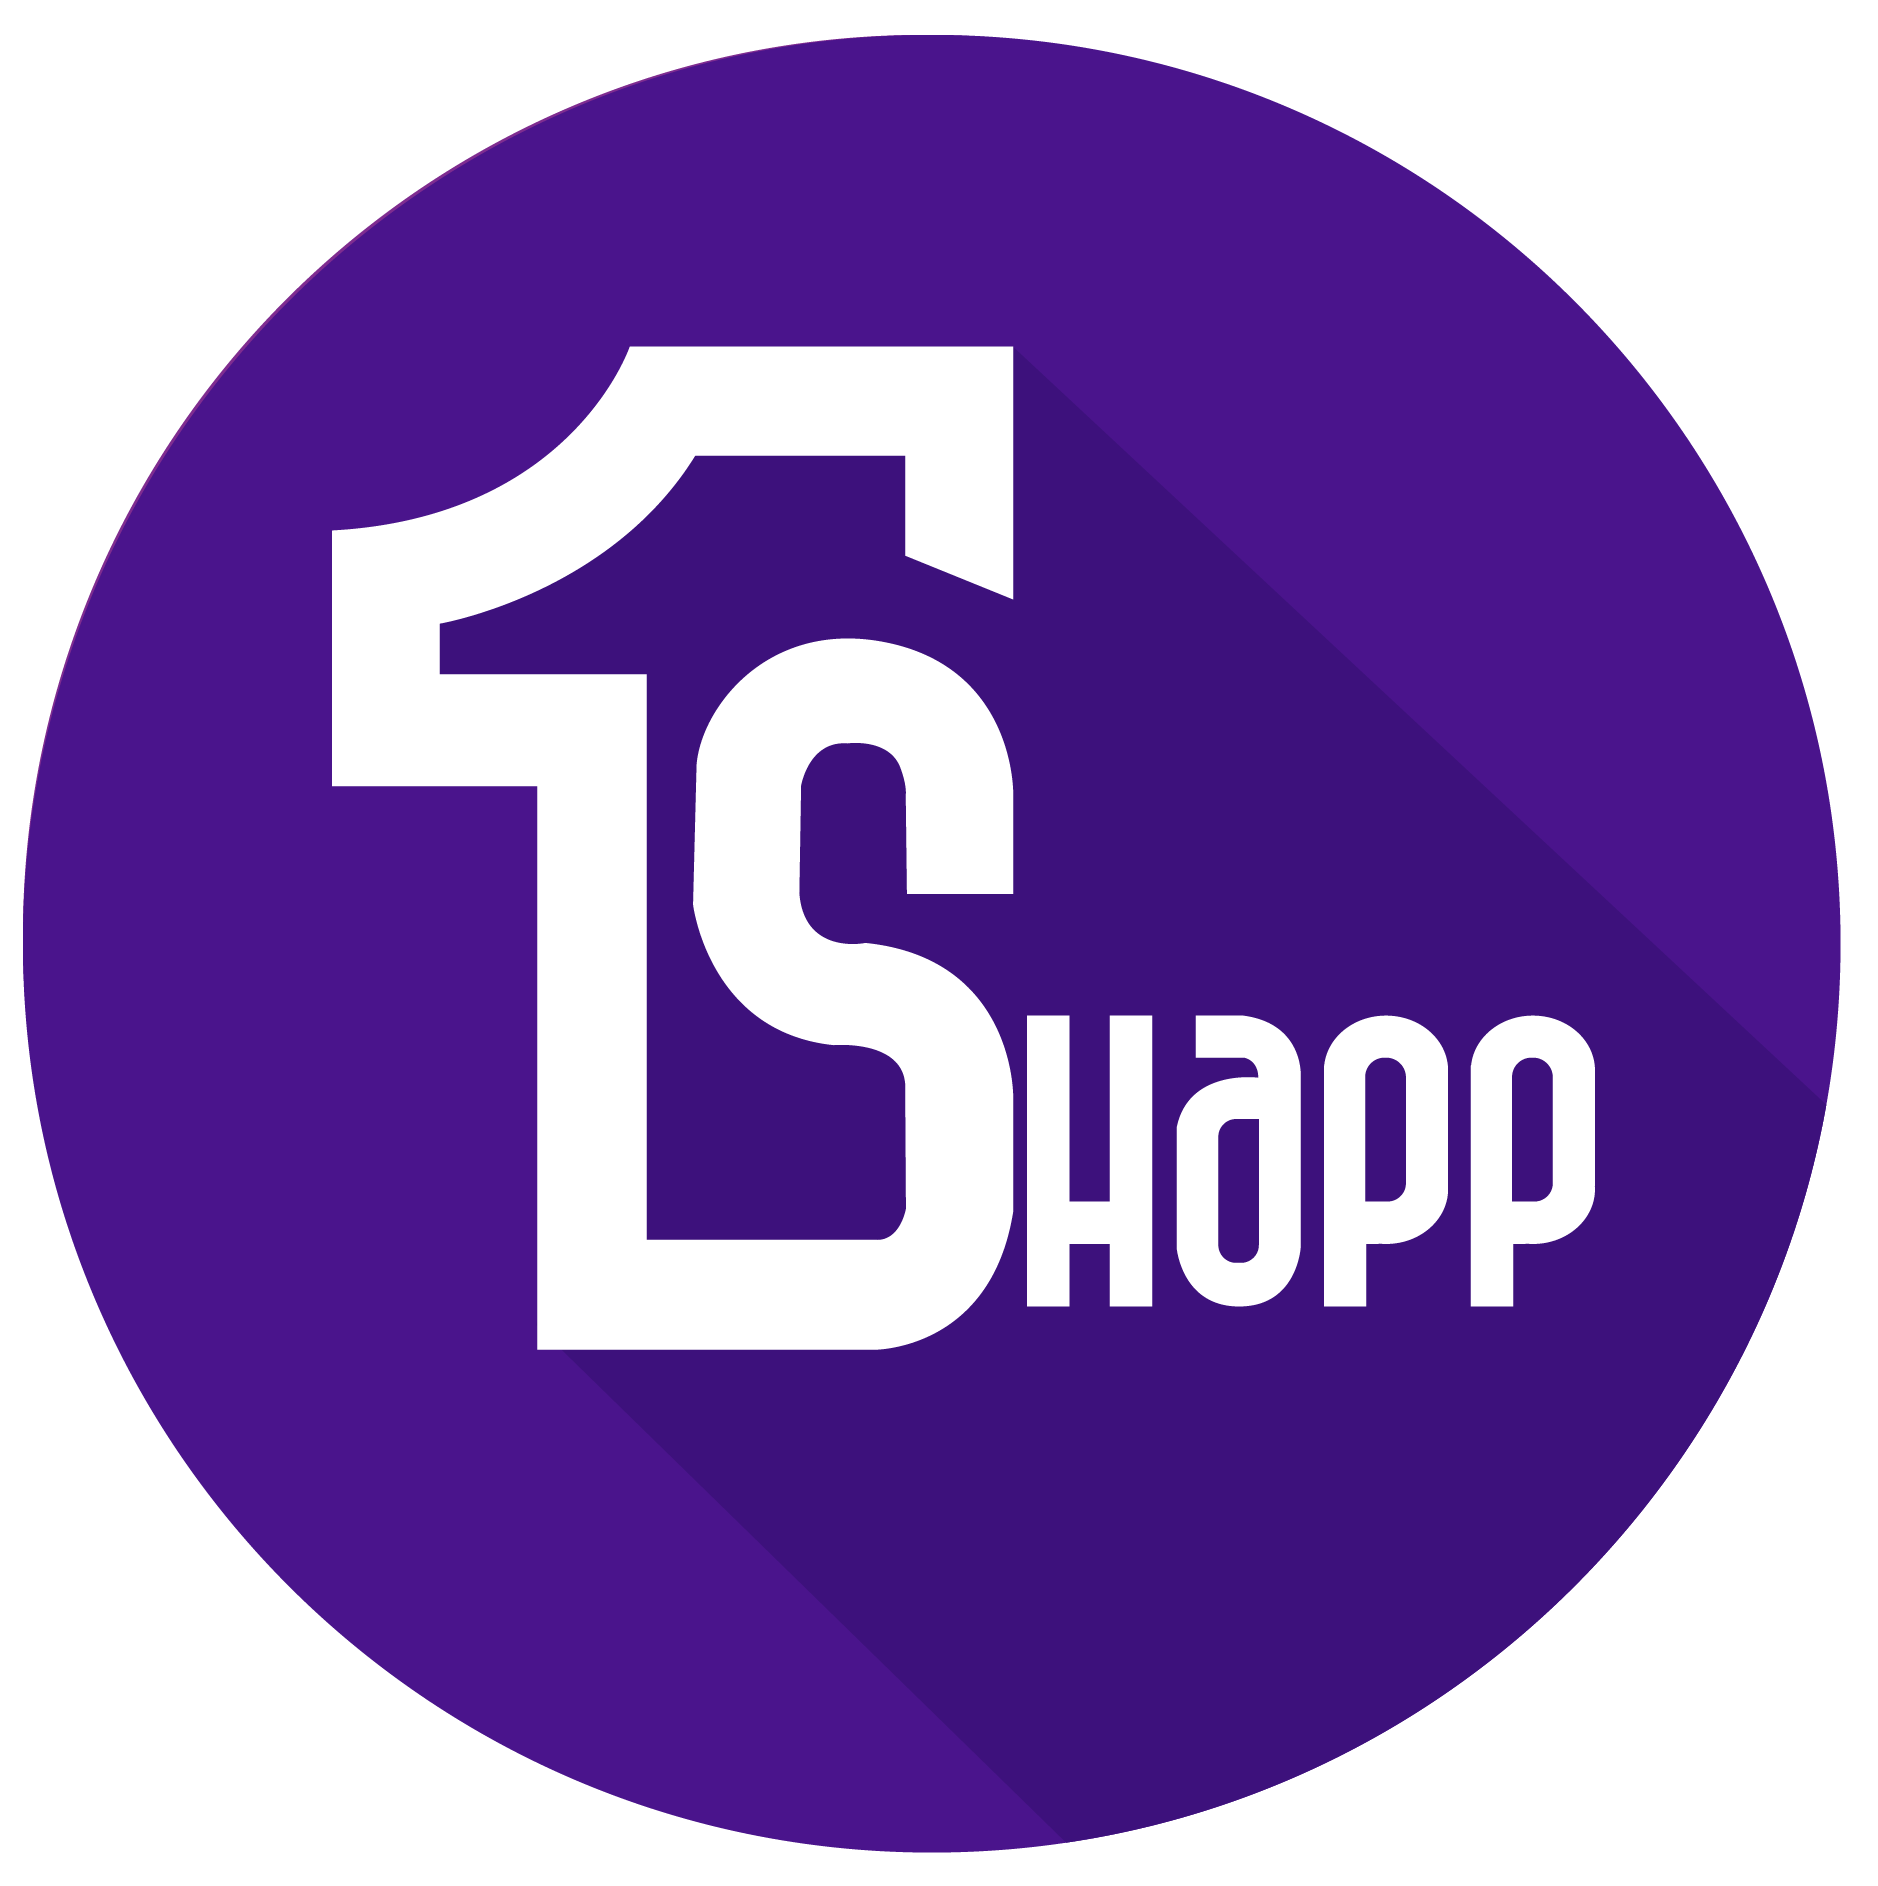 OneShapp Logo